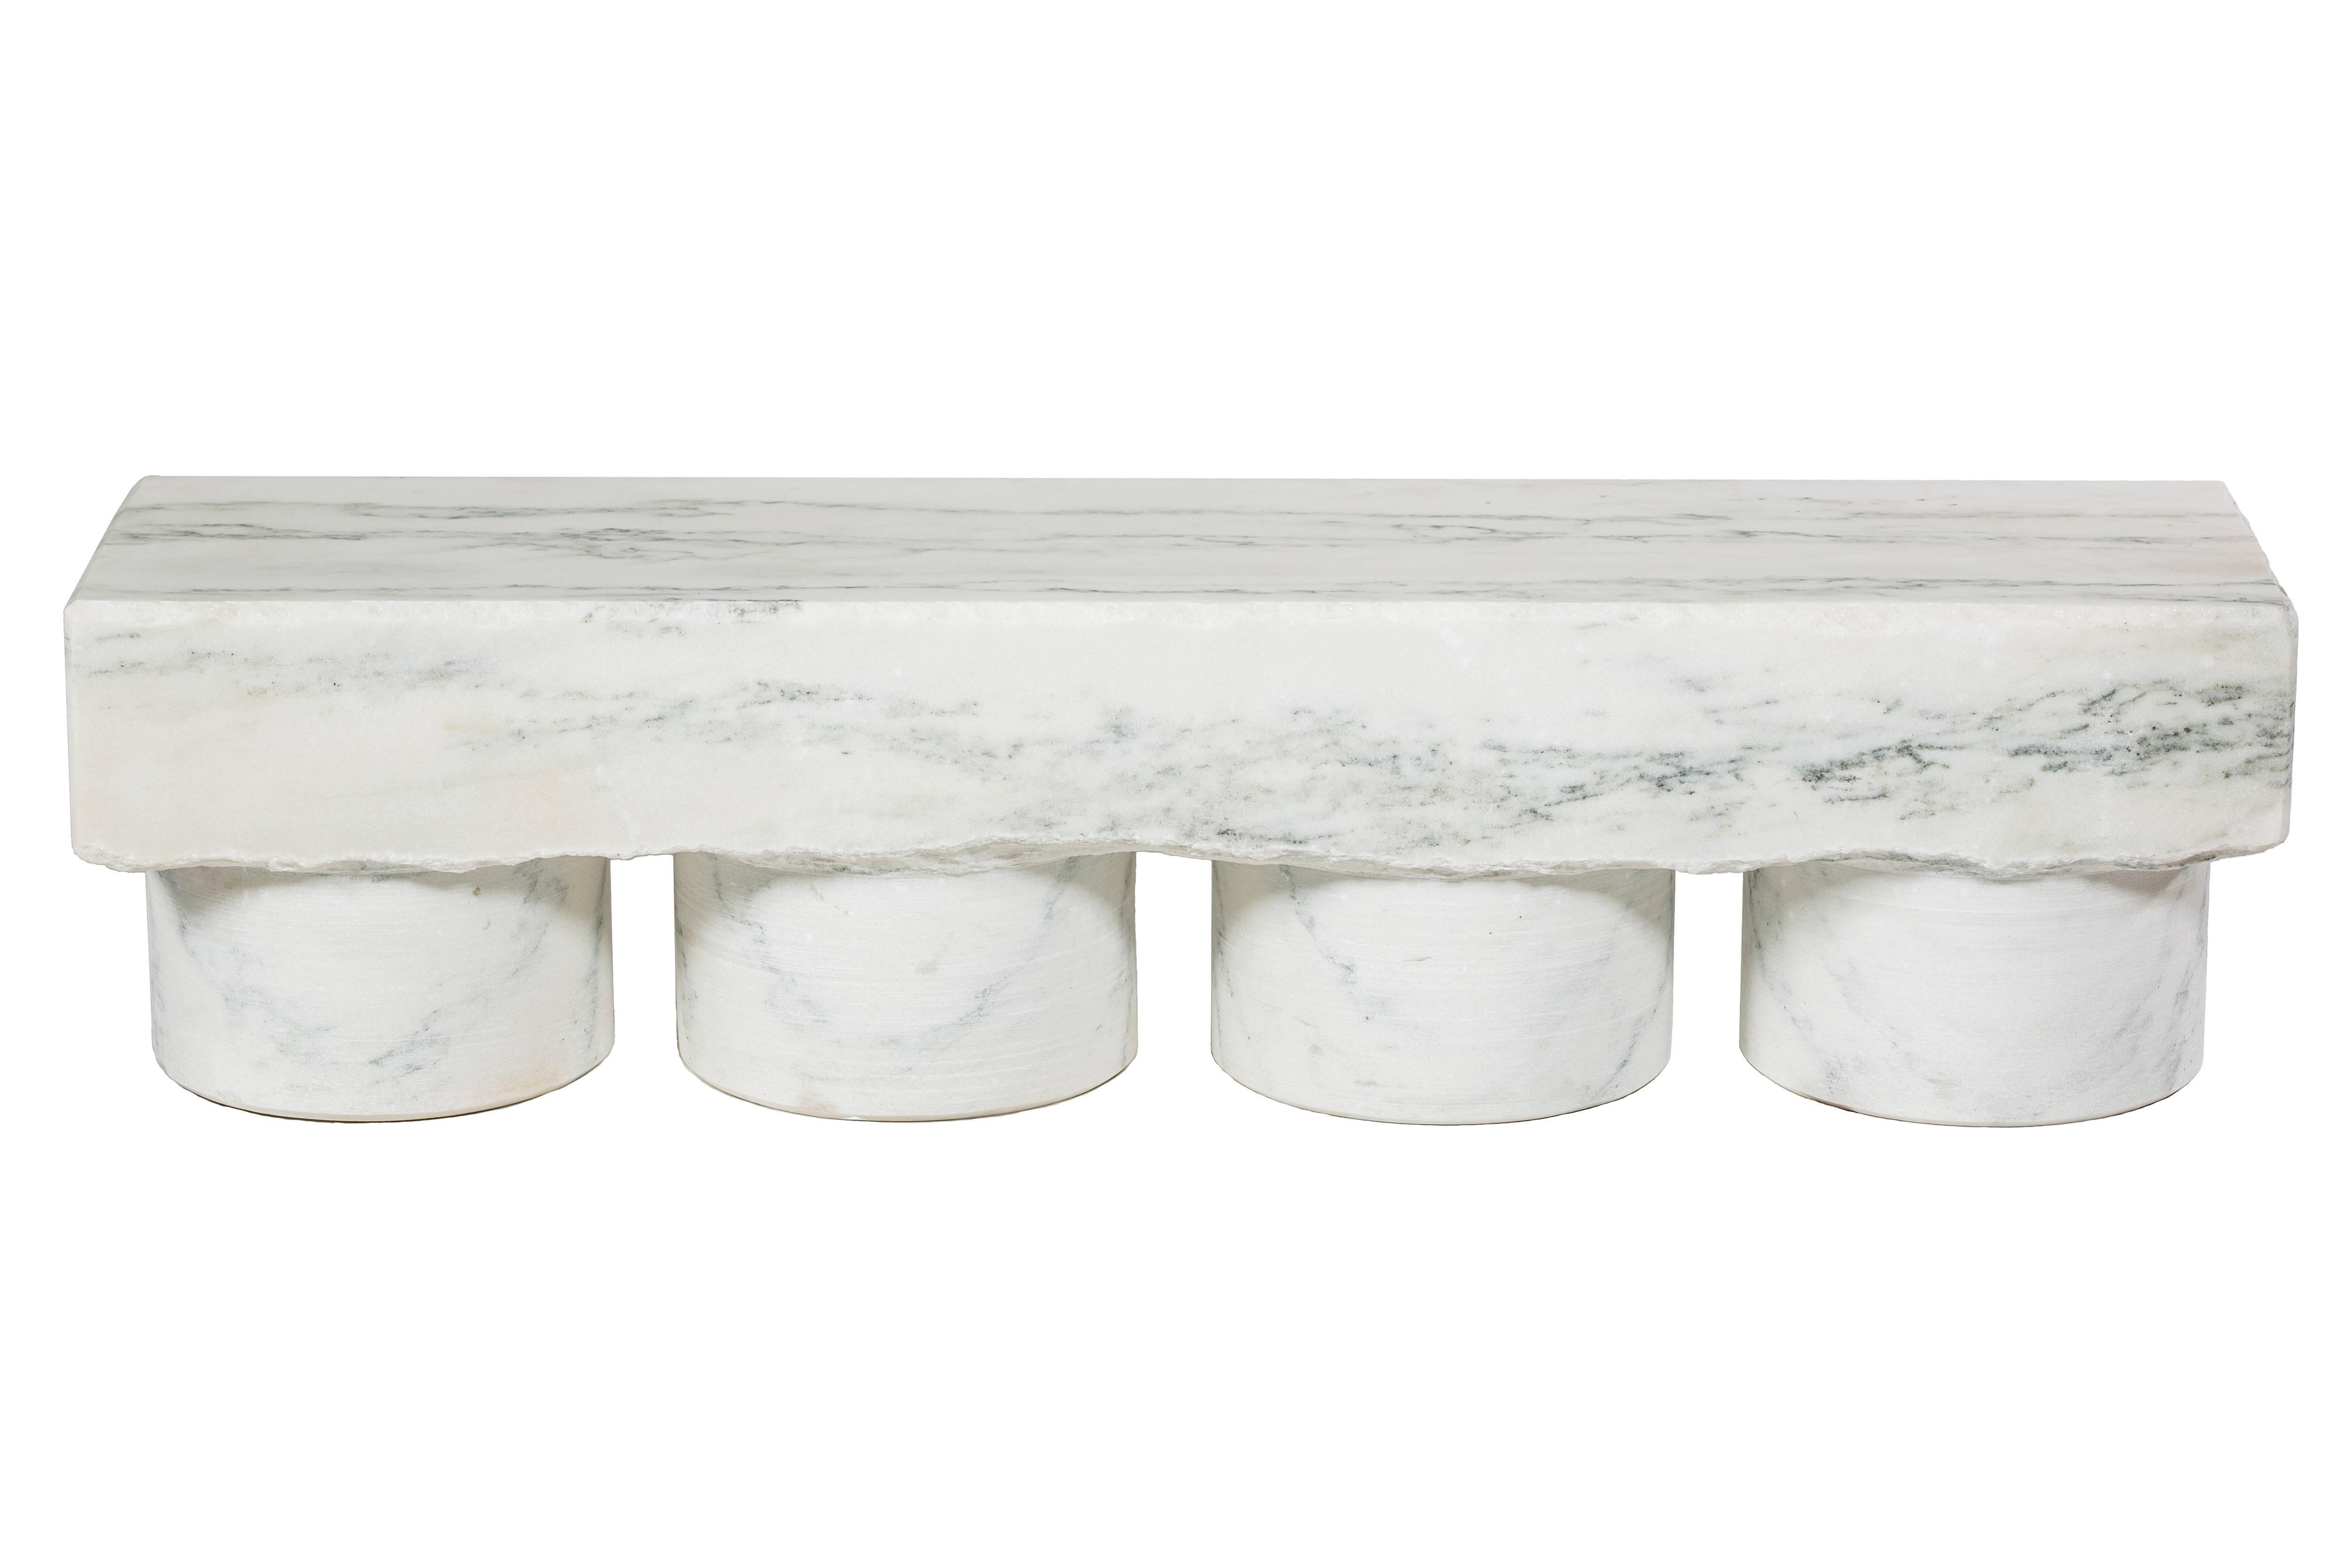 Max Lamb
Danby, Vermont
marble 
2015